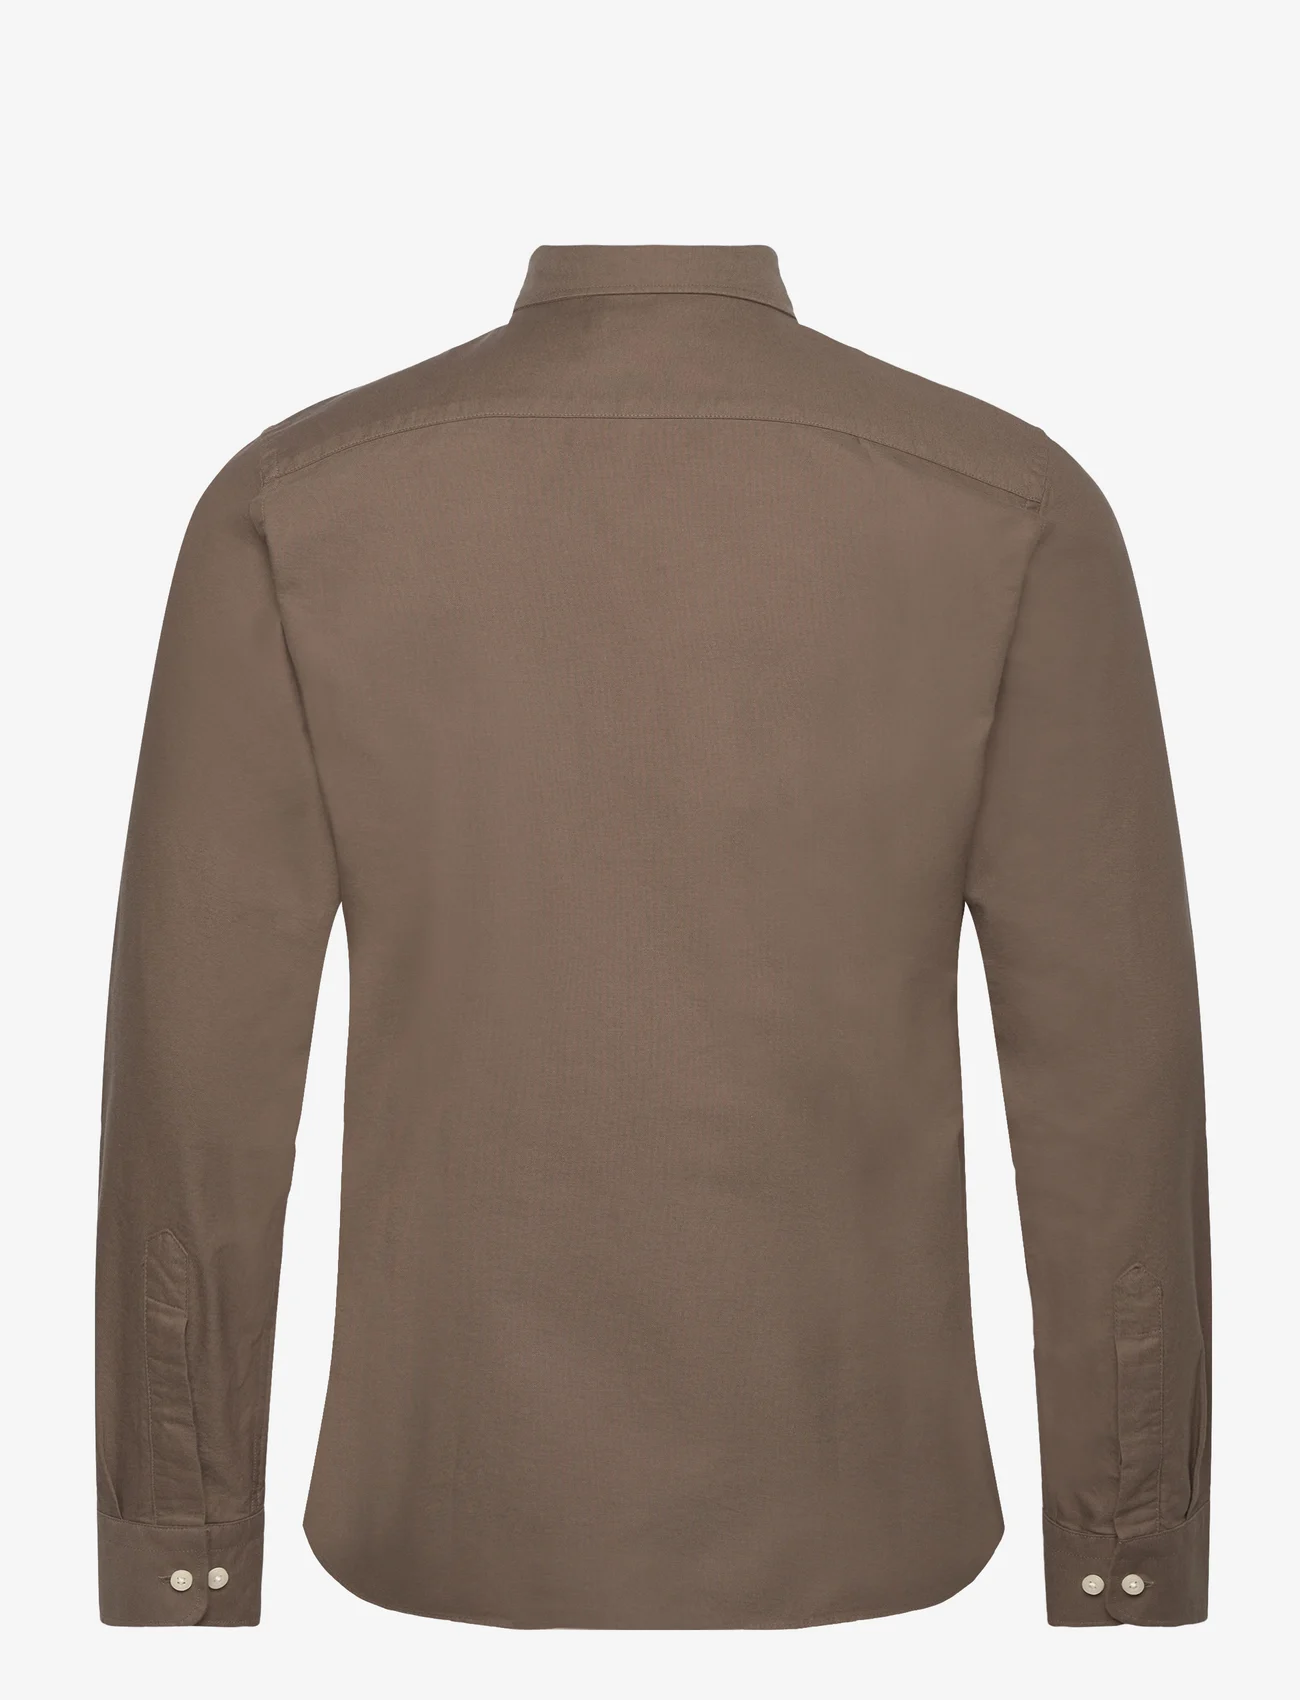 Morris - Douglas Shirt-Slim Fit - basic shirts - brown - 1